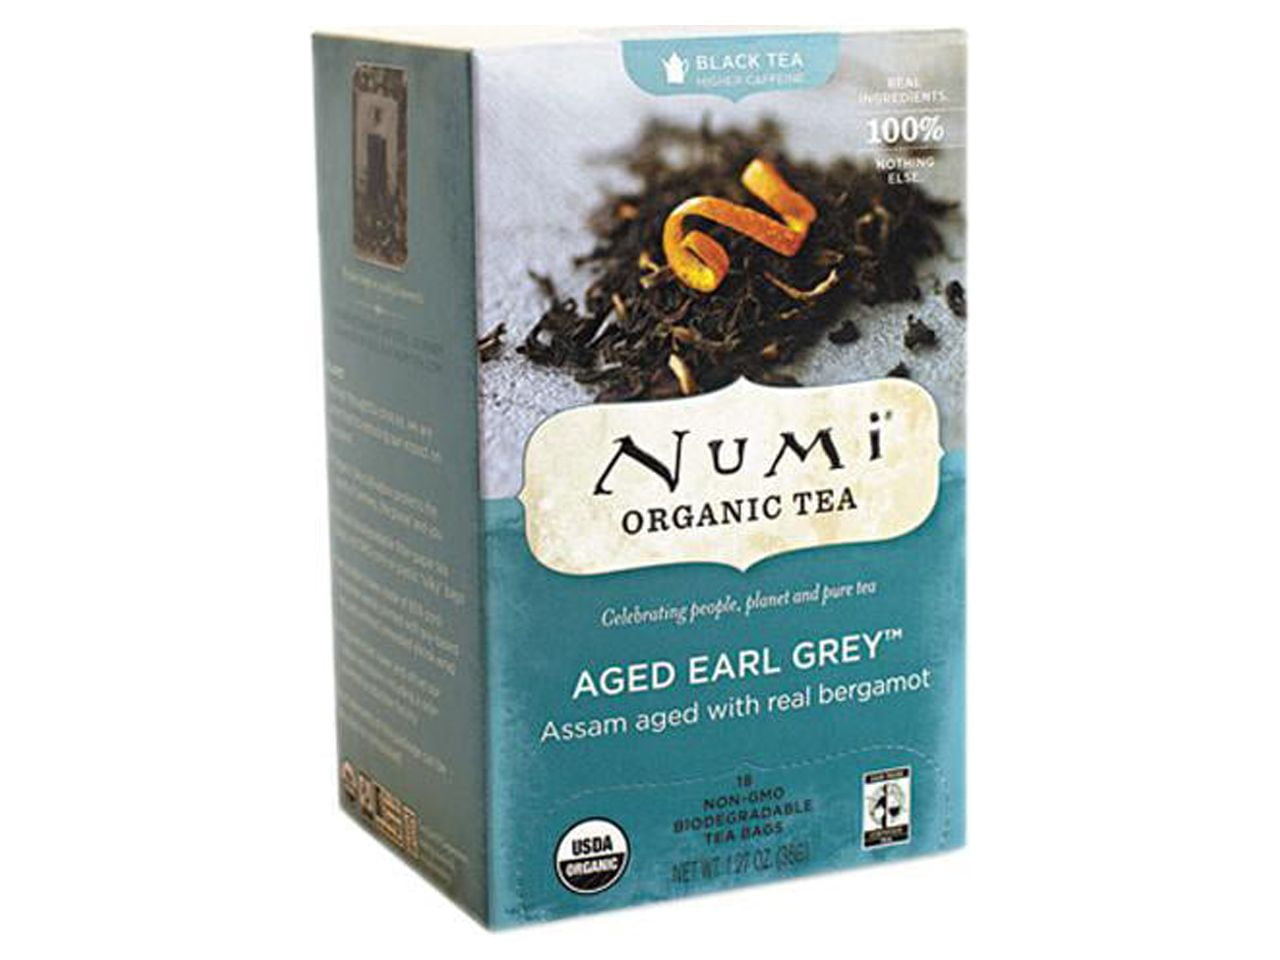 Numi Tea Aged Earl Grey Black Tea 1.27 Oz Box